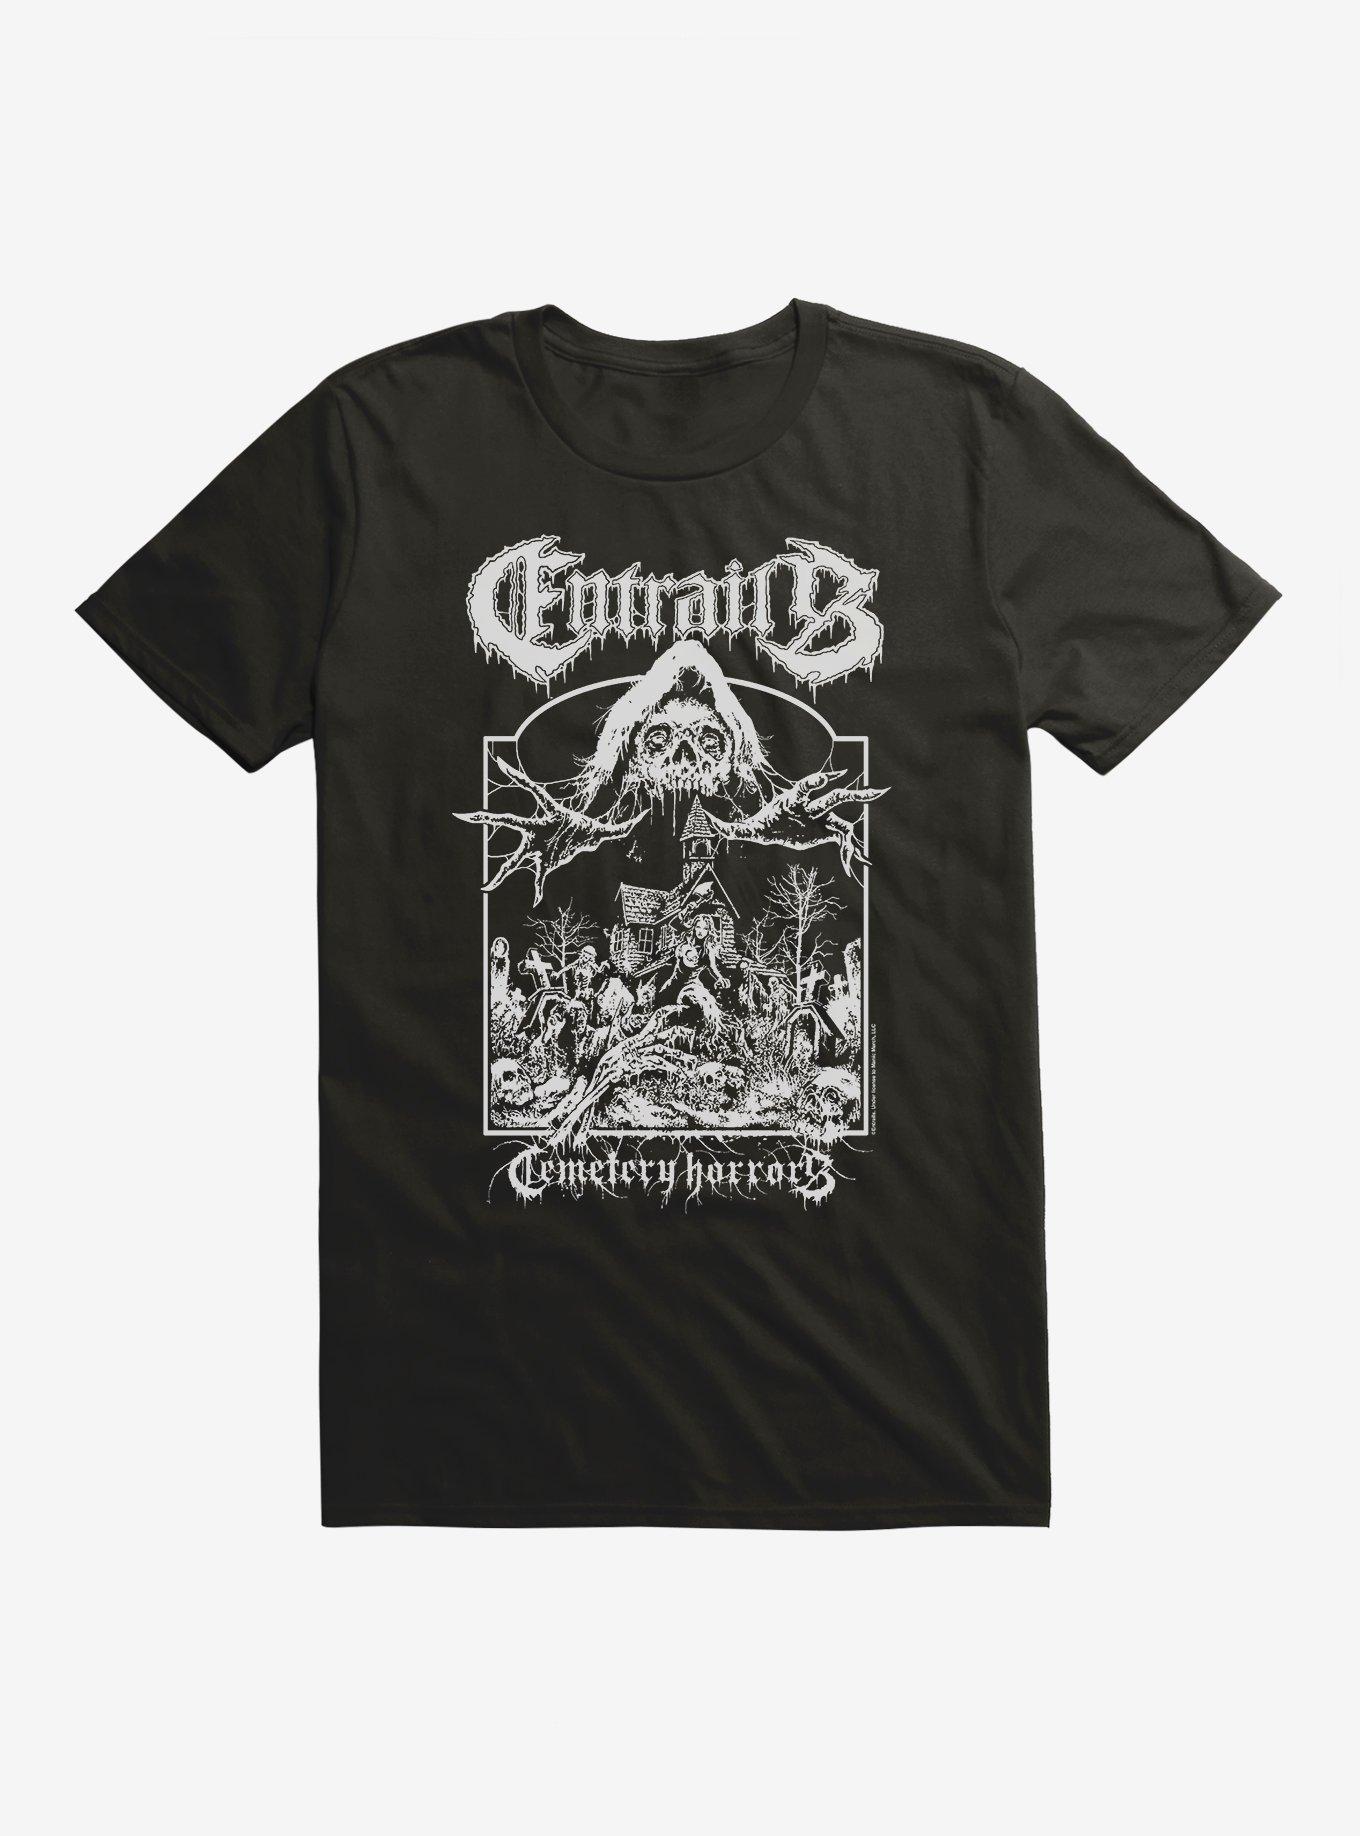 Entrails Cemetery Horrors T-Shirt